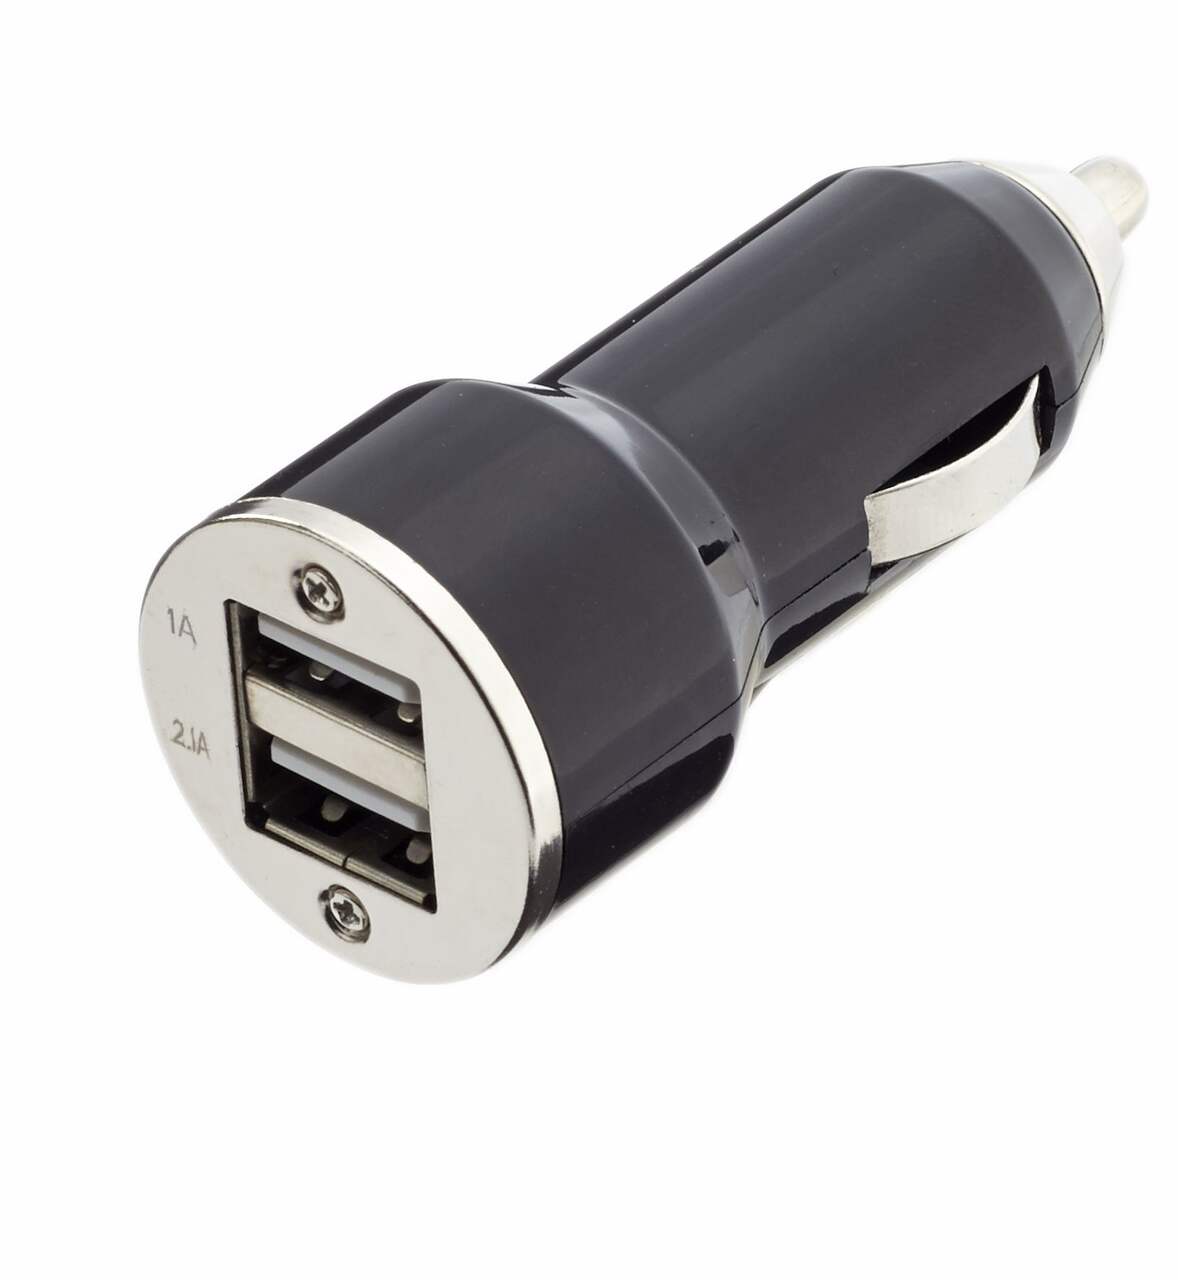 Car Charger Lighters Pockets Organize Storage Box Pocket USB